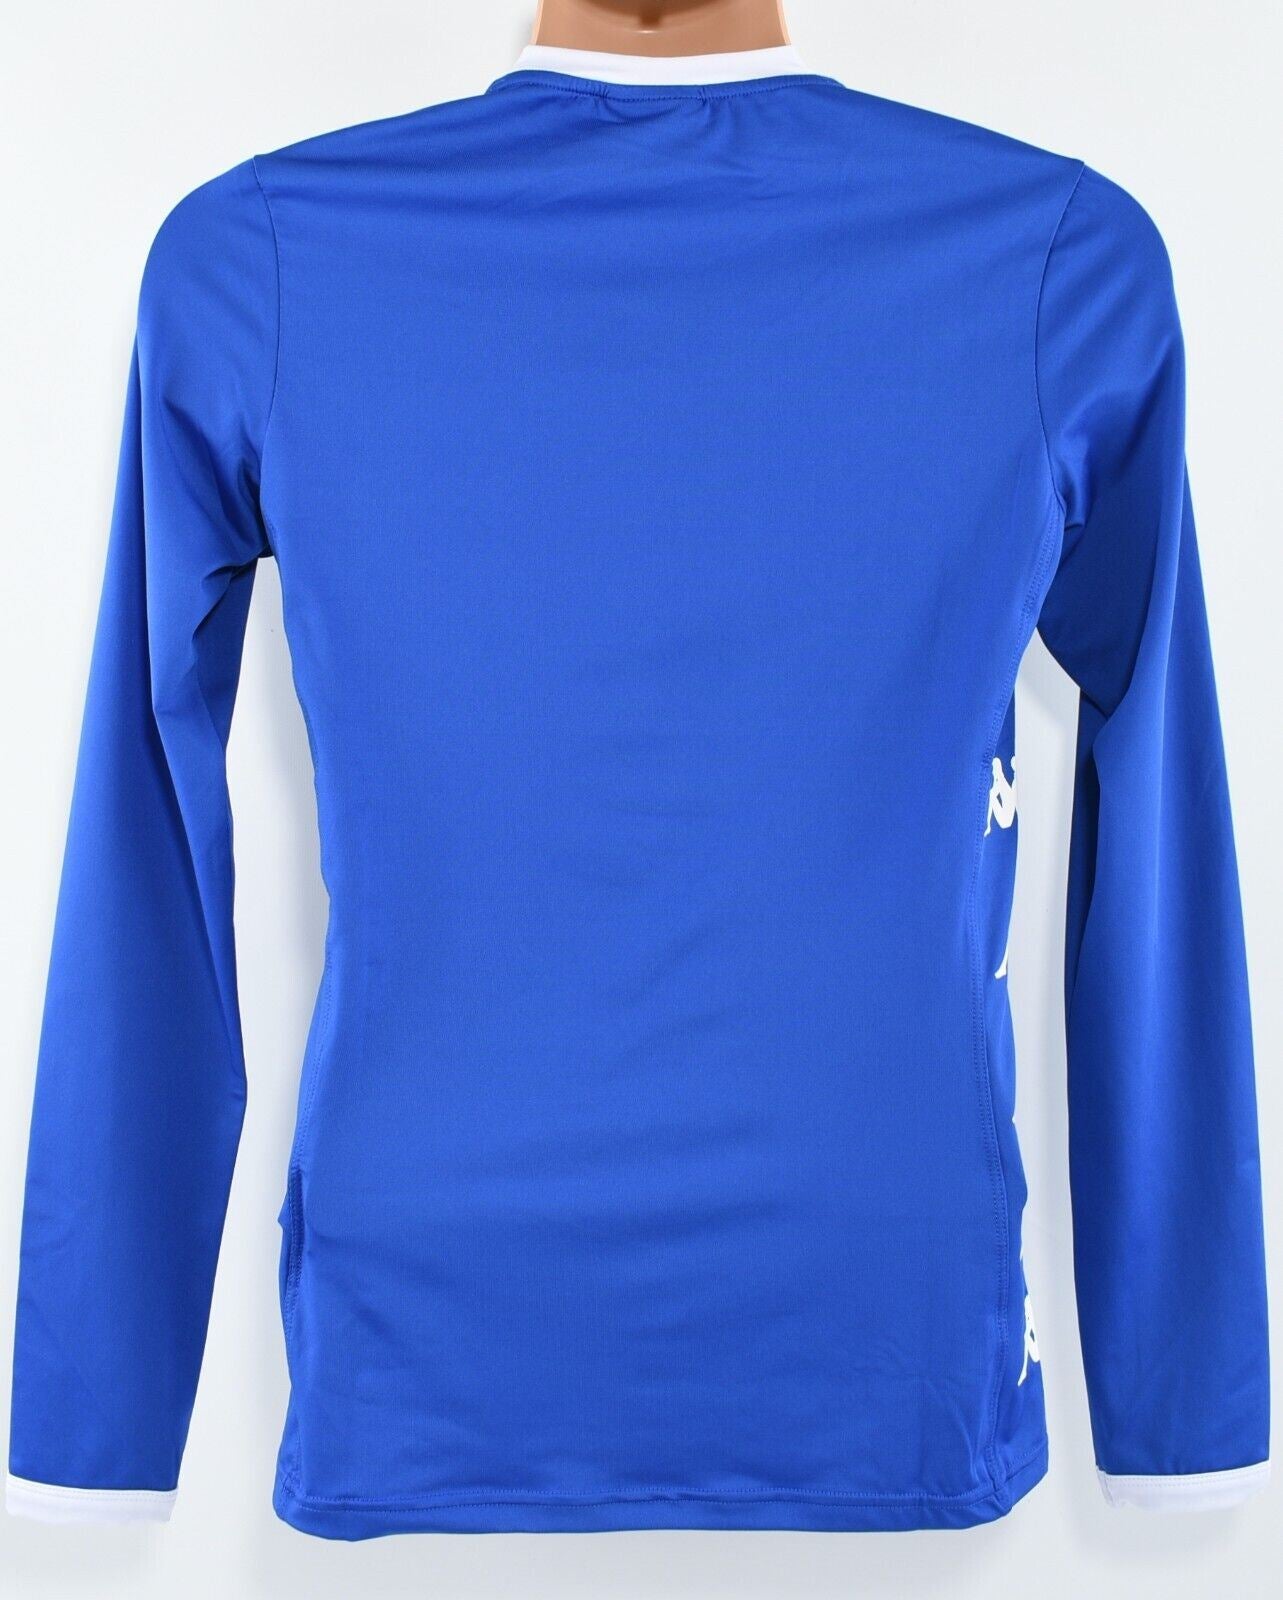 KAPPA Activewear: Men's Long Sleeve T-shirt Top, Nautical Blue, size S